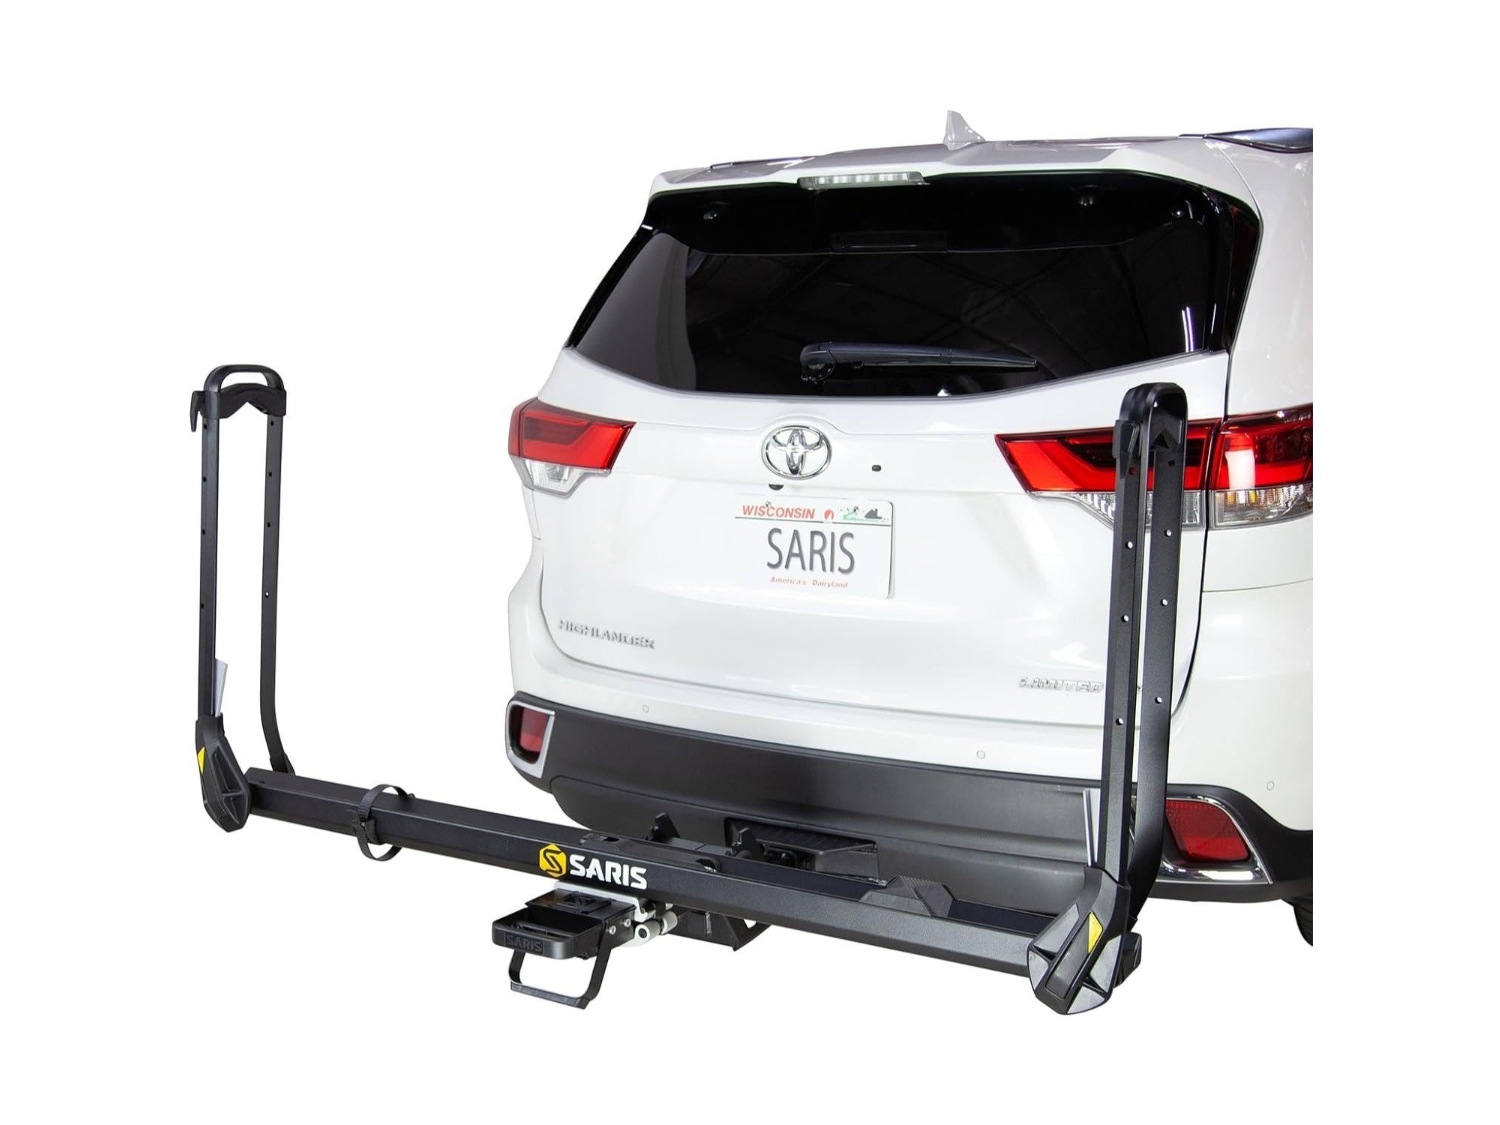 Image of Saris MHS Hitch Bike Rack for SUV Cars & Trucks Modular Hitch System Black ID 843812181044